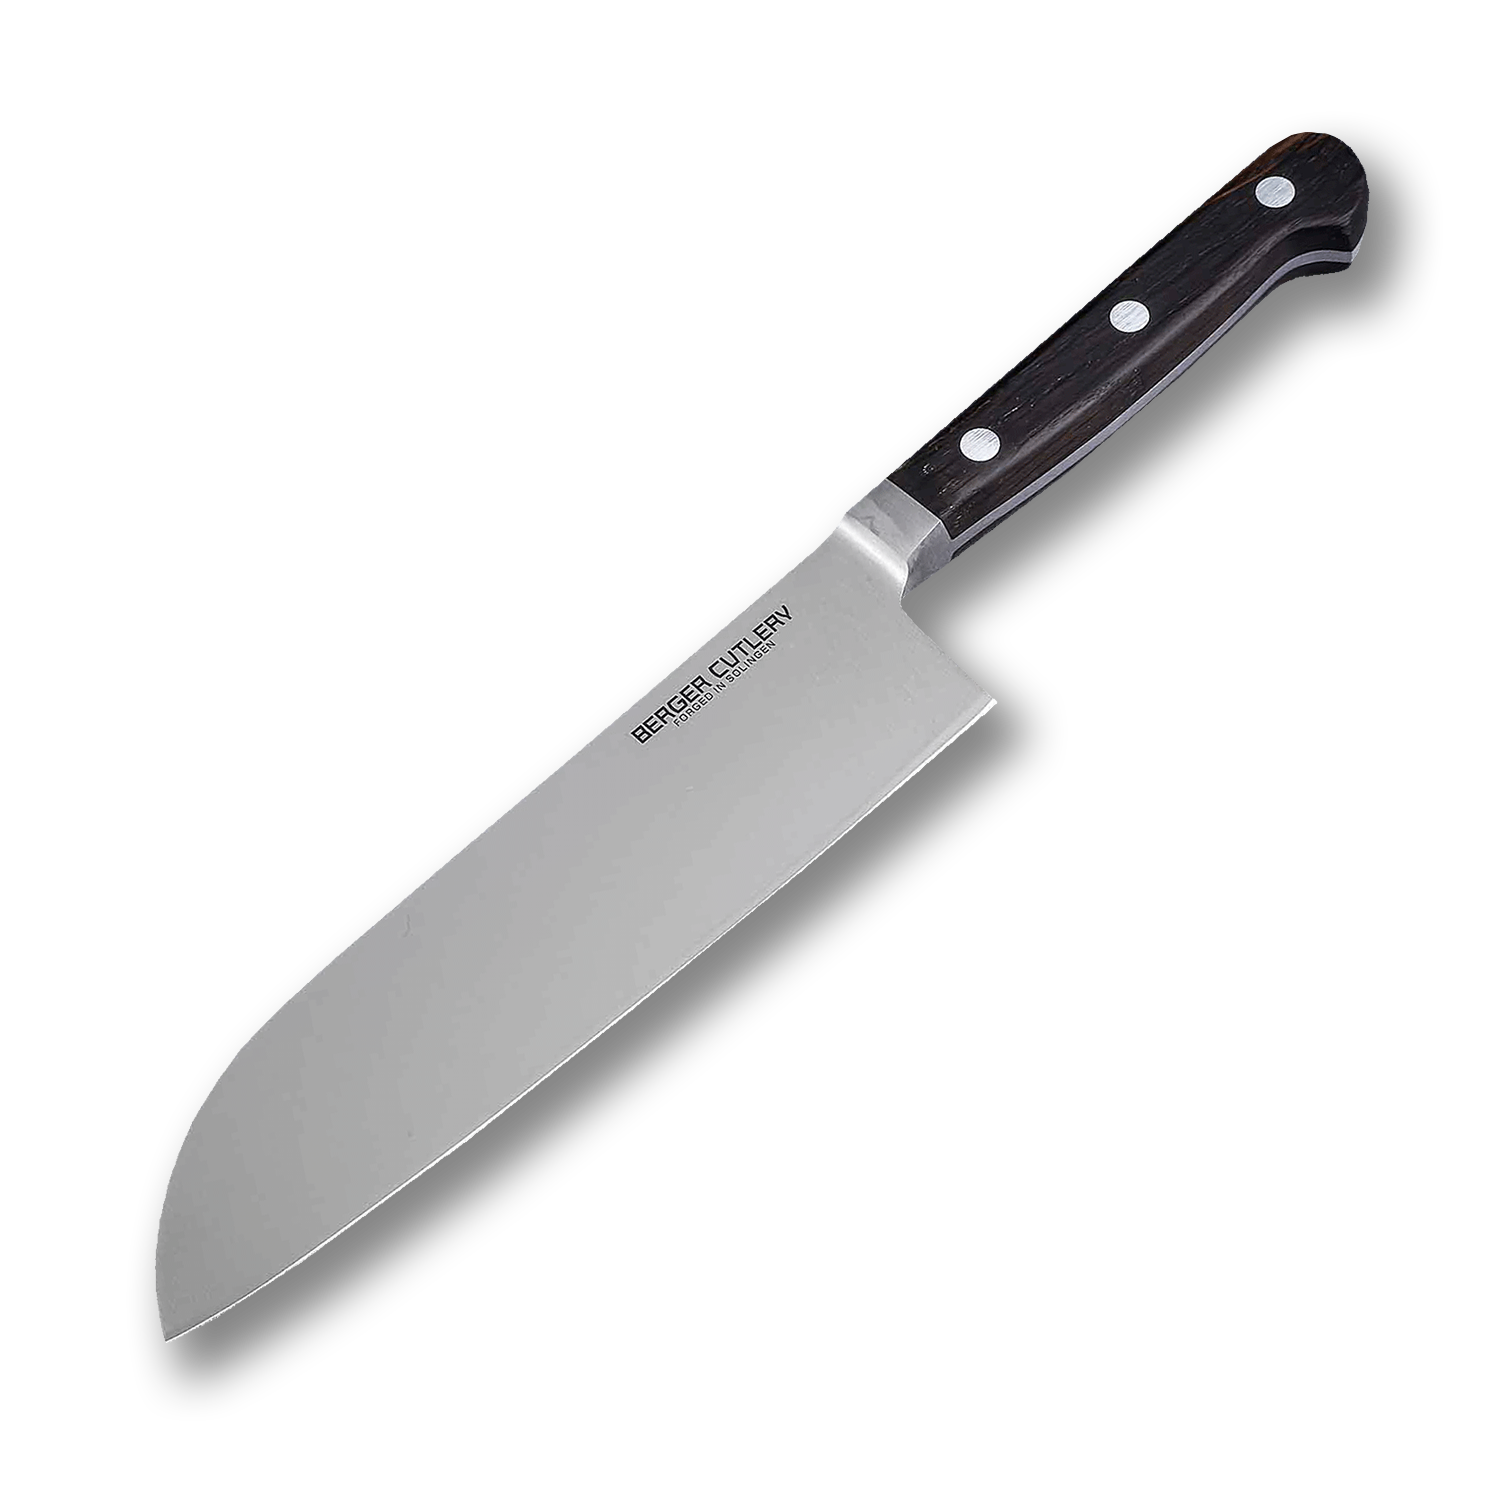 Поварской кухонный нож сантоку Berger Cutlery 18 см, сталь кованая 1.4116, BC210818